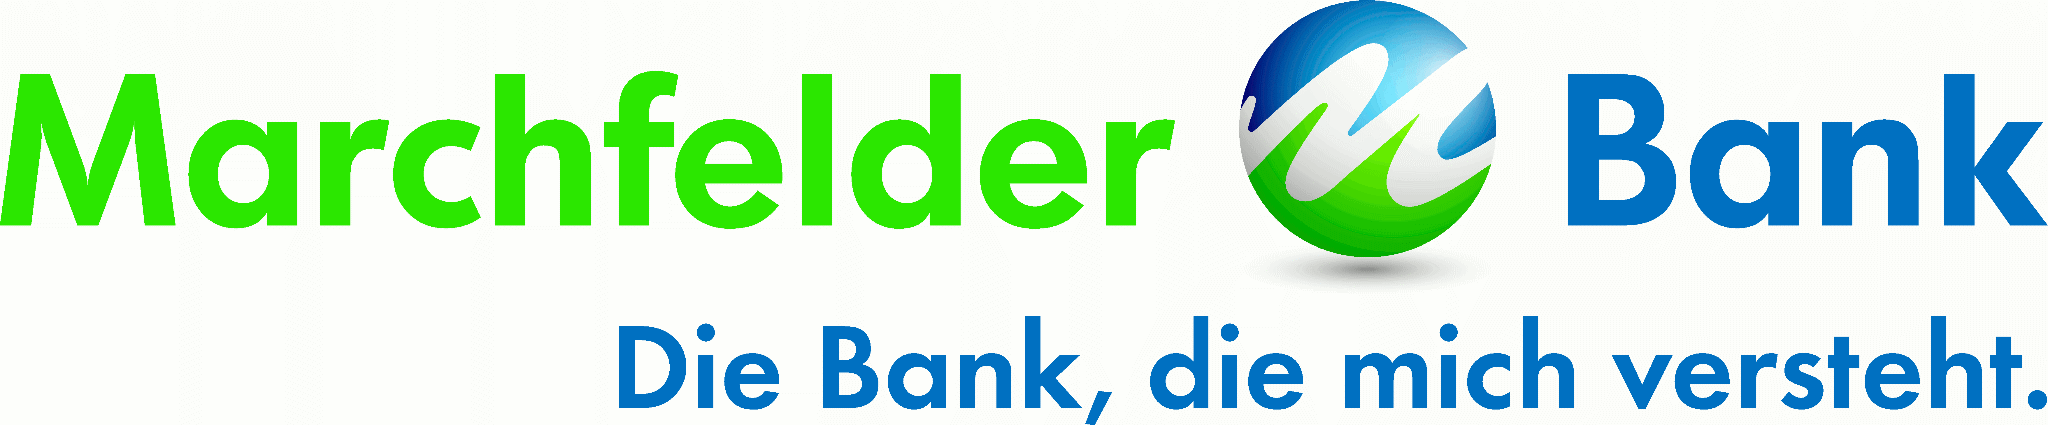 Marchfelder Bank eG